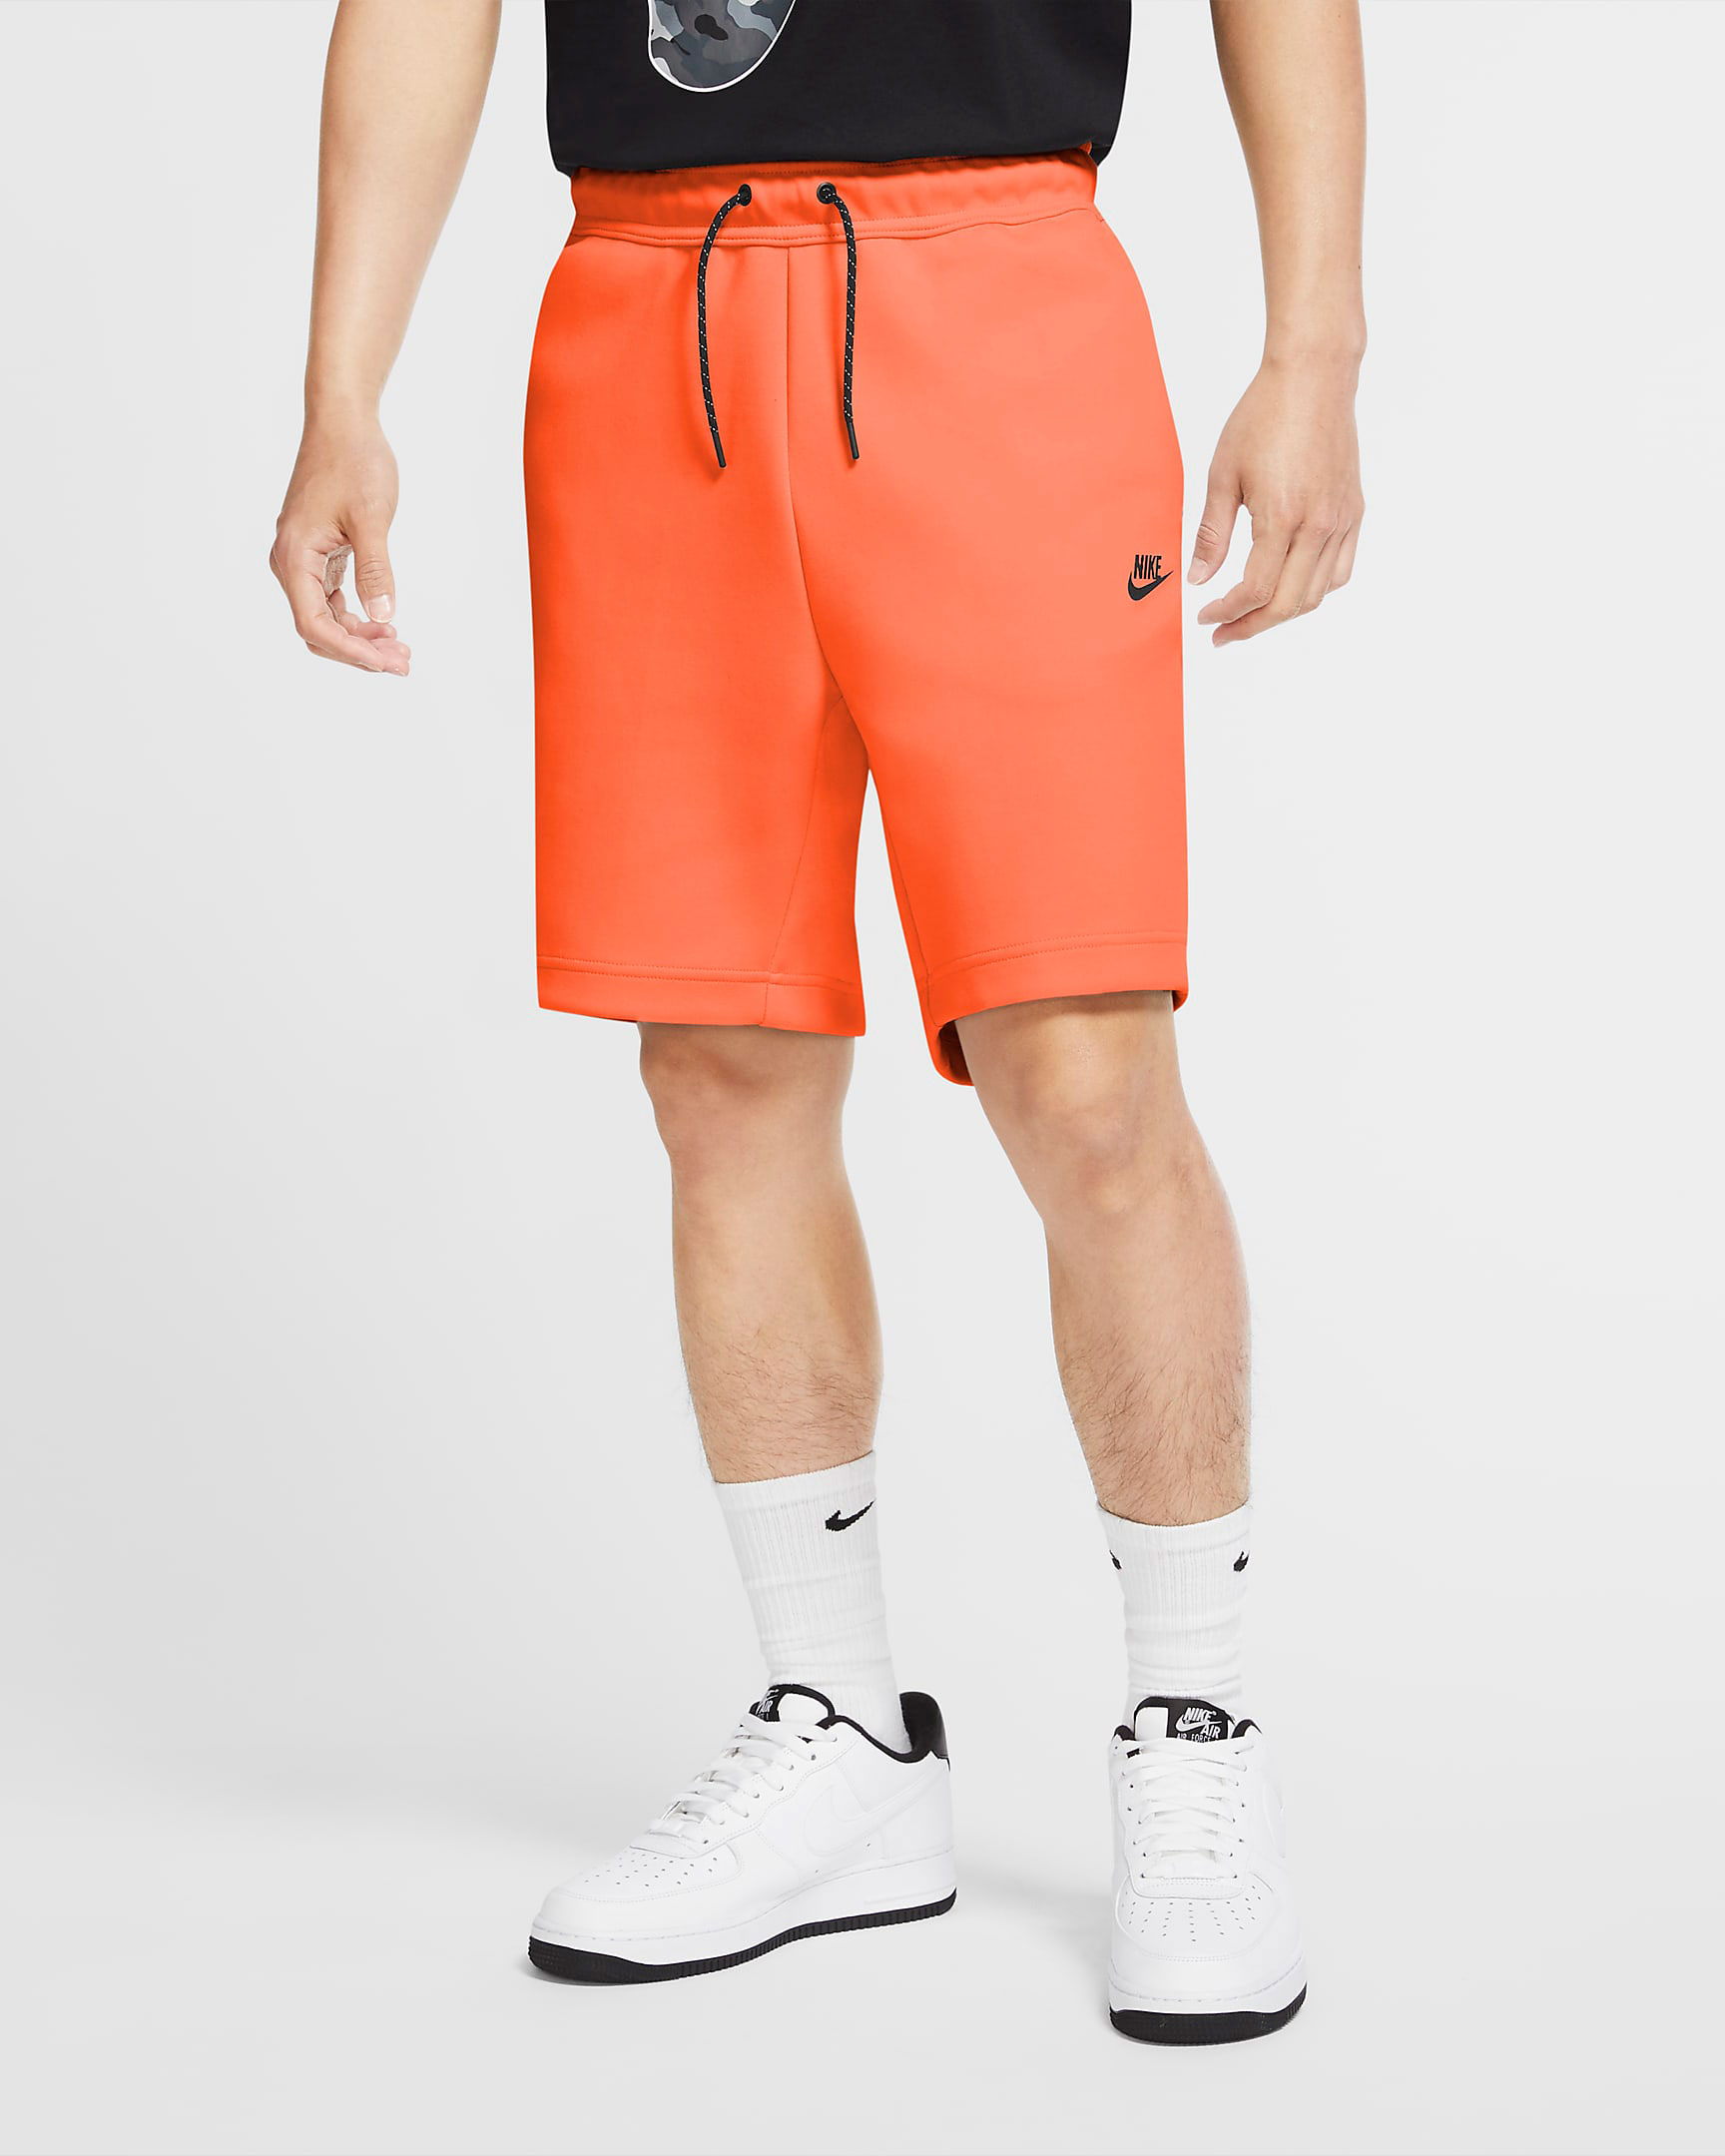 nike-tech-fleece-shorts-orange